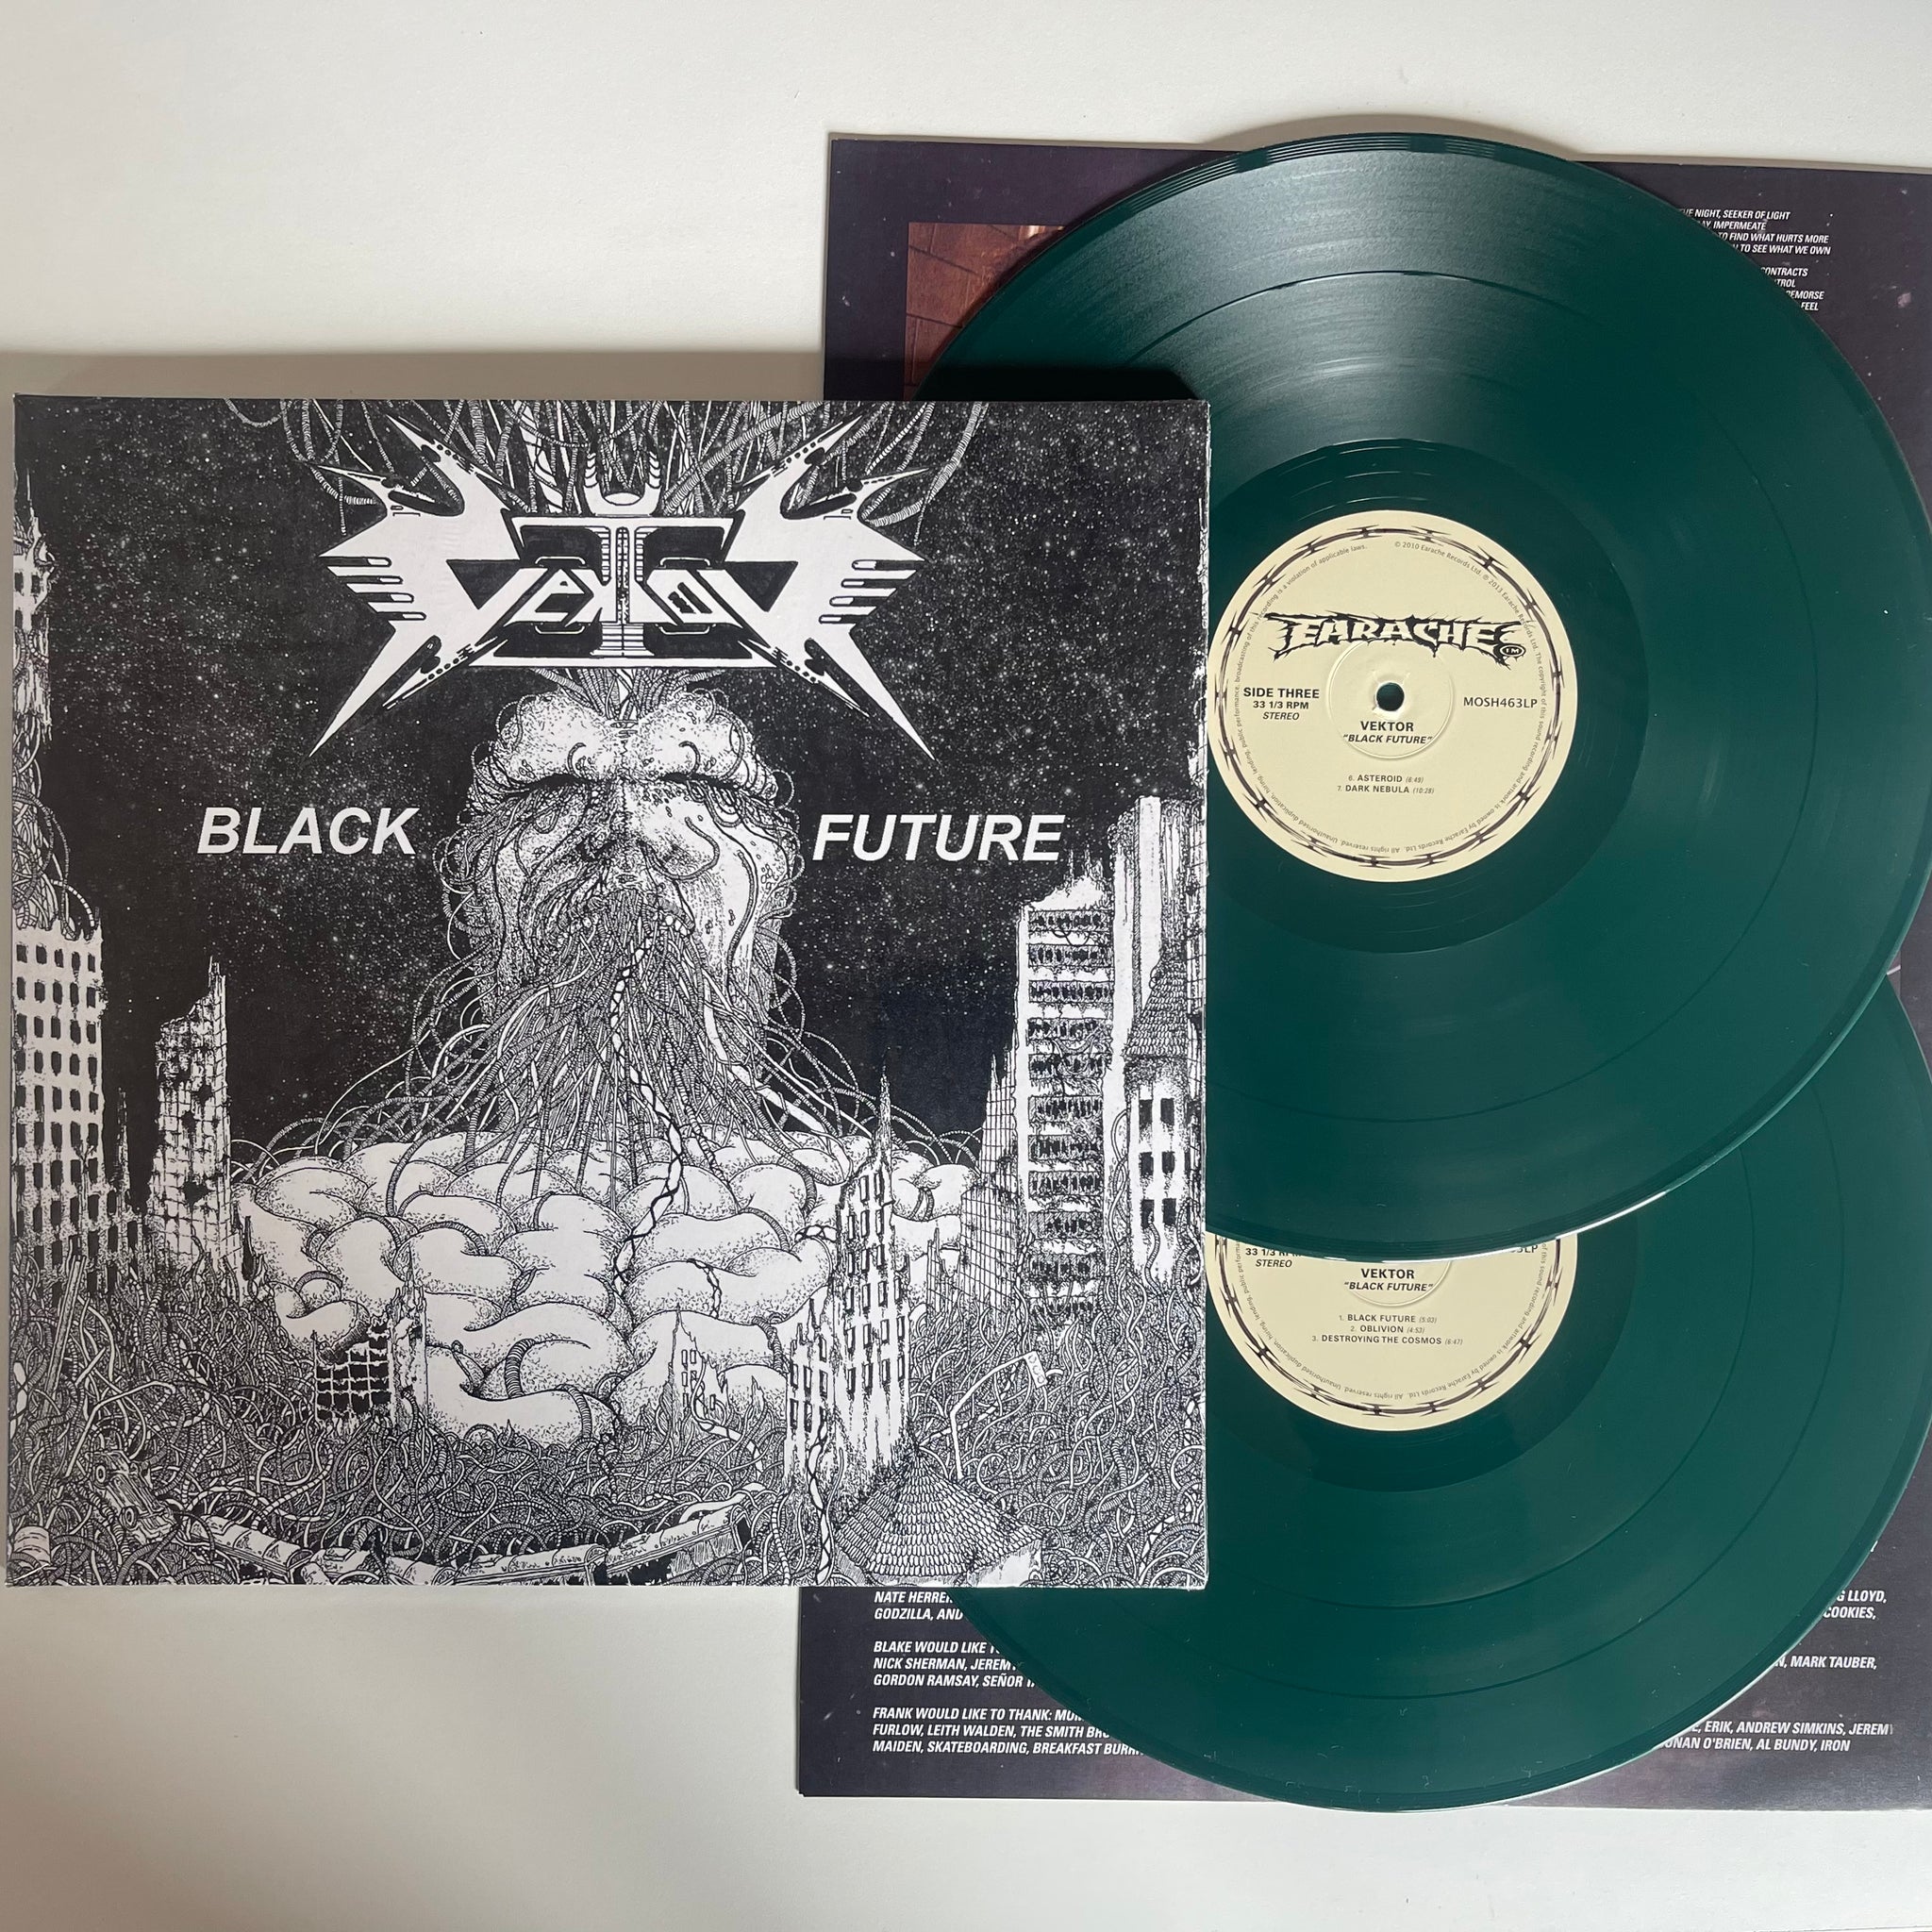 Vektor "Black Future" Gatefold 2x12" Green Vinyl